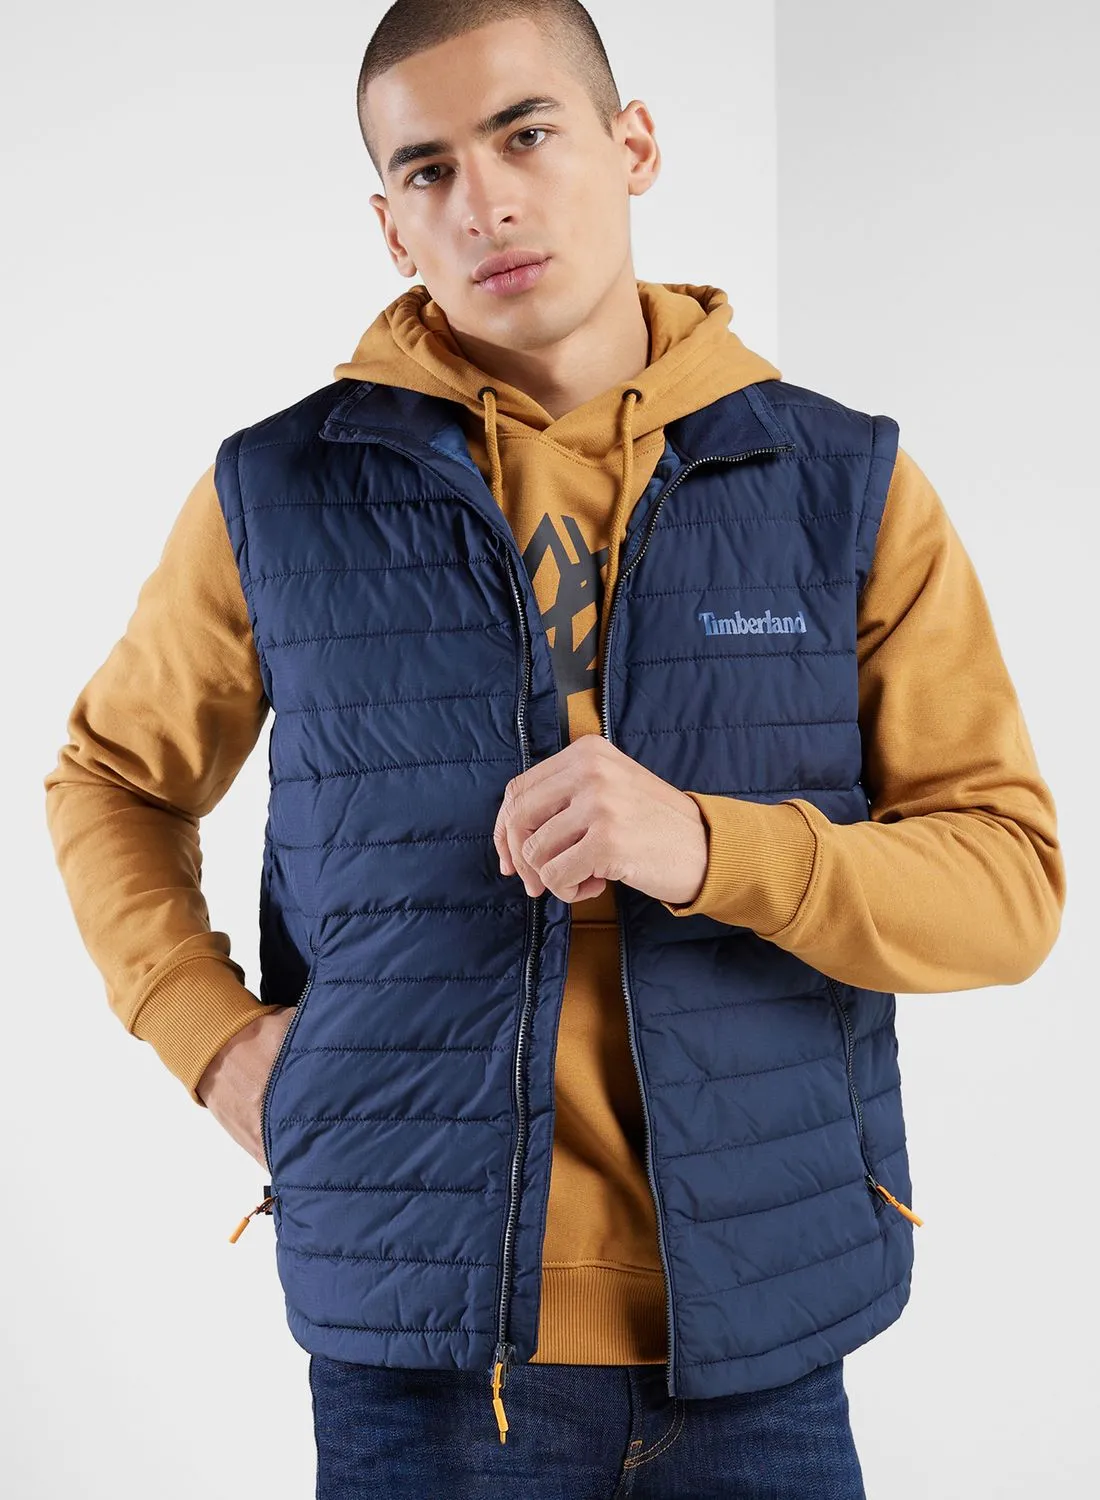 Timberland Axis Peak Dwr Packable Vest Jacket